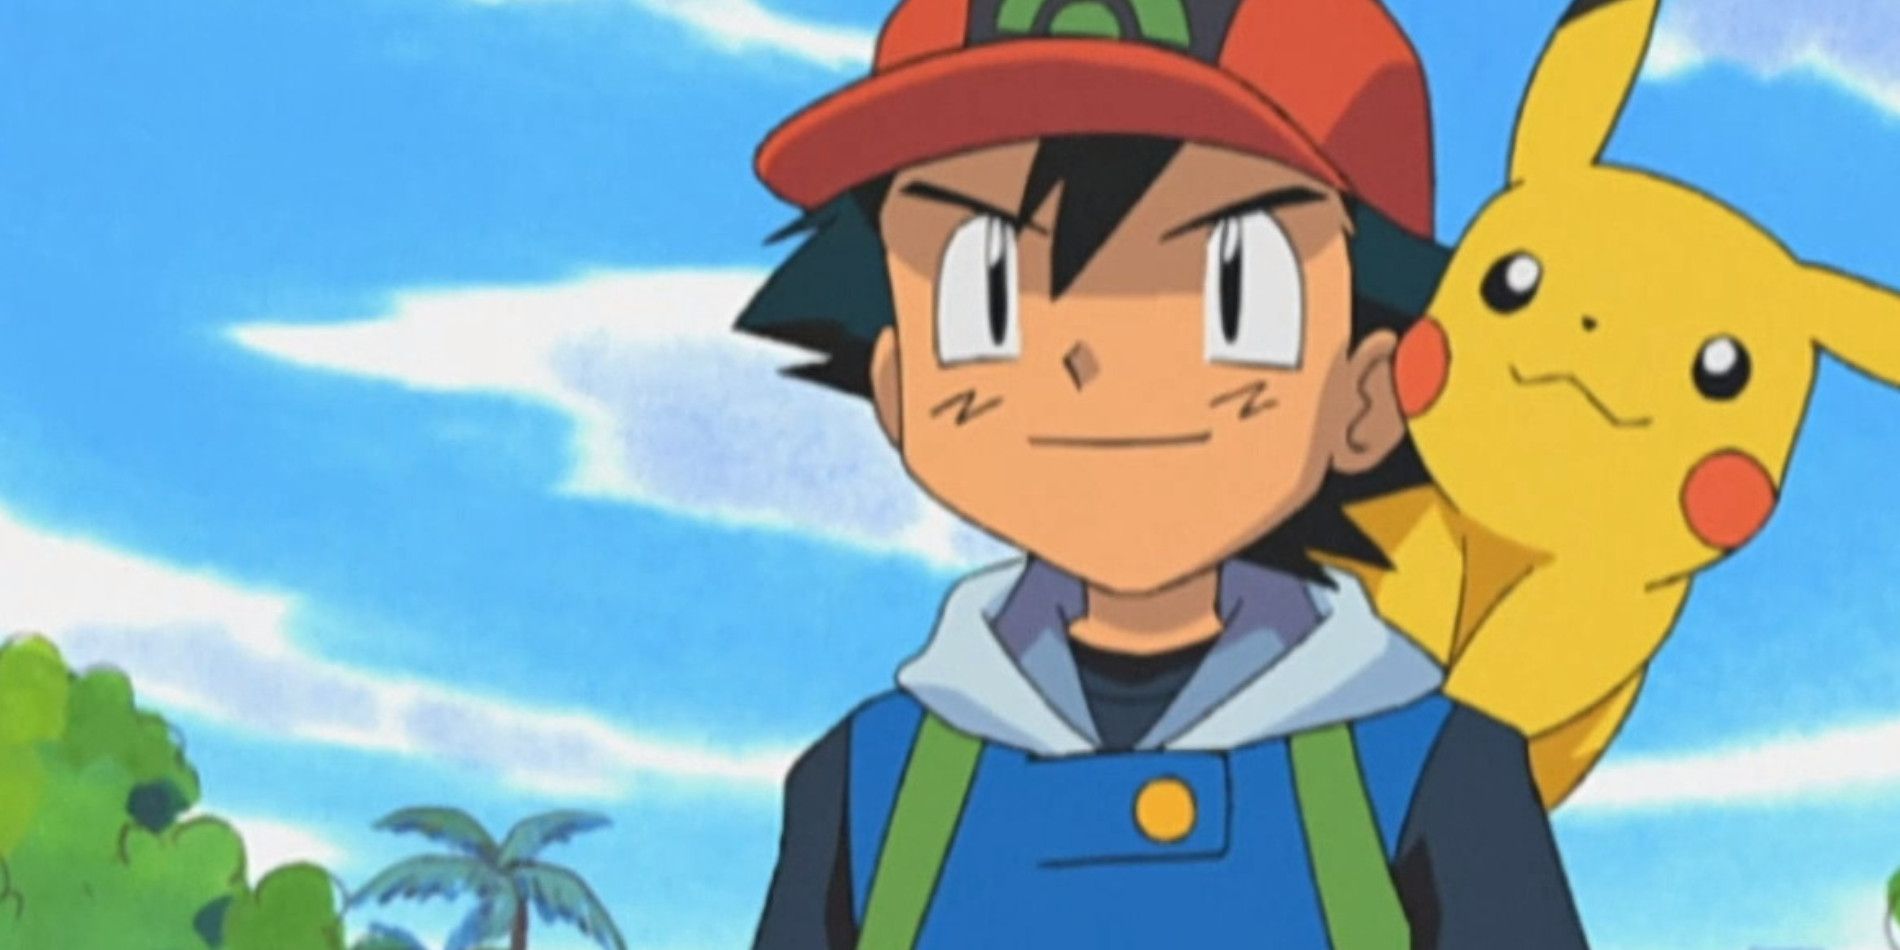 Pokemon Ruby and Sapphire screenshot showing Ash and Pikachu 